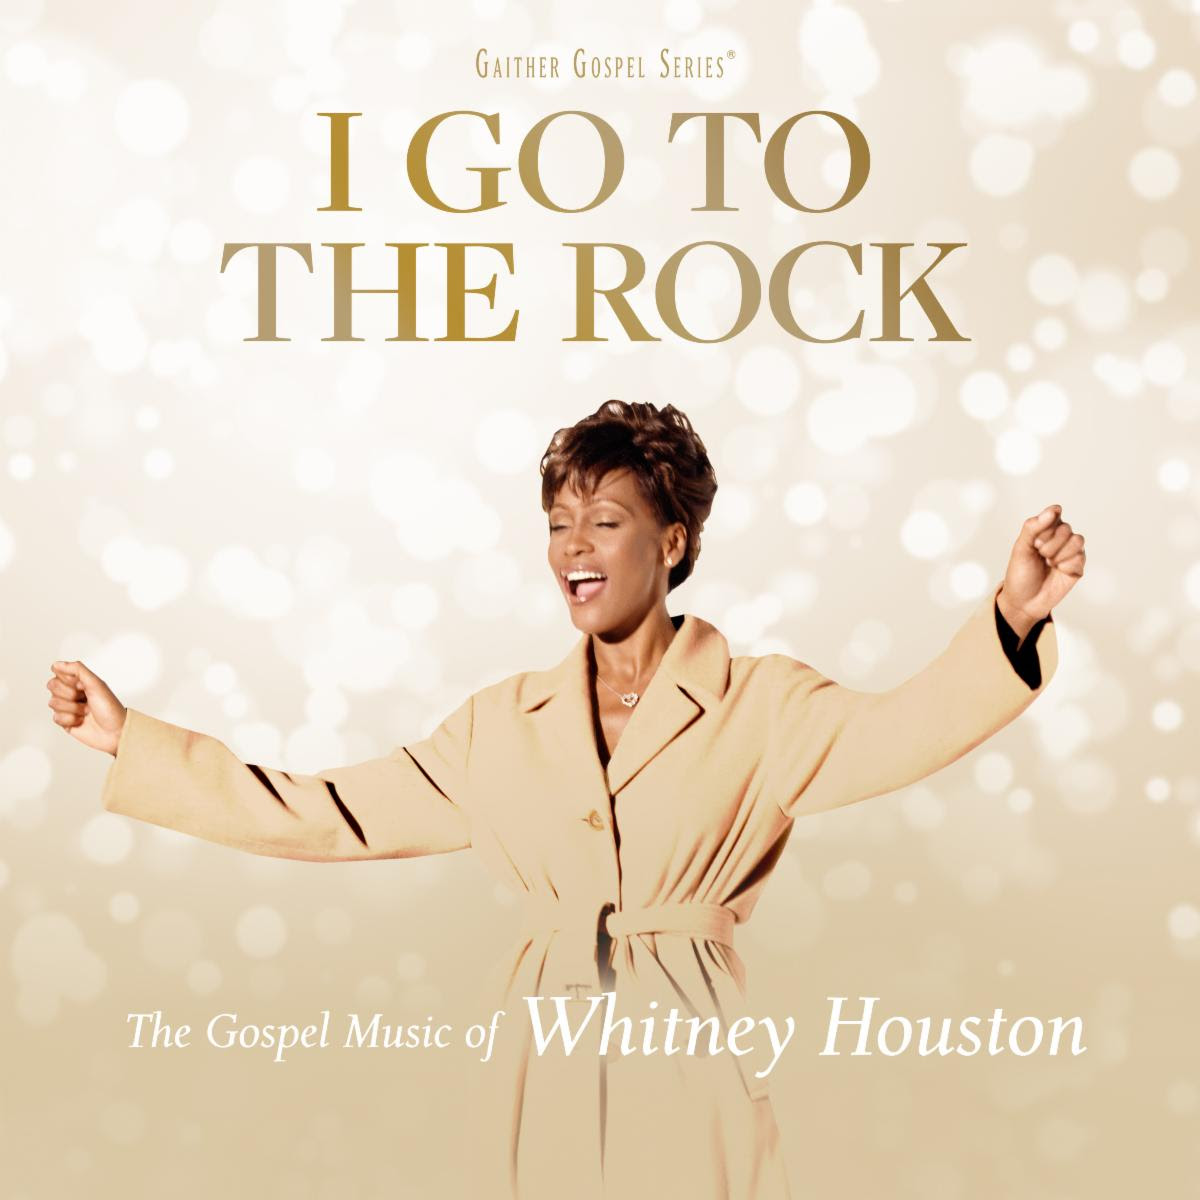 Whitney Houston, `I Go to the Rock: The Gospel Music of Whitney Houston,` cover art courtesy of The Press House